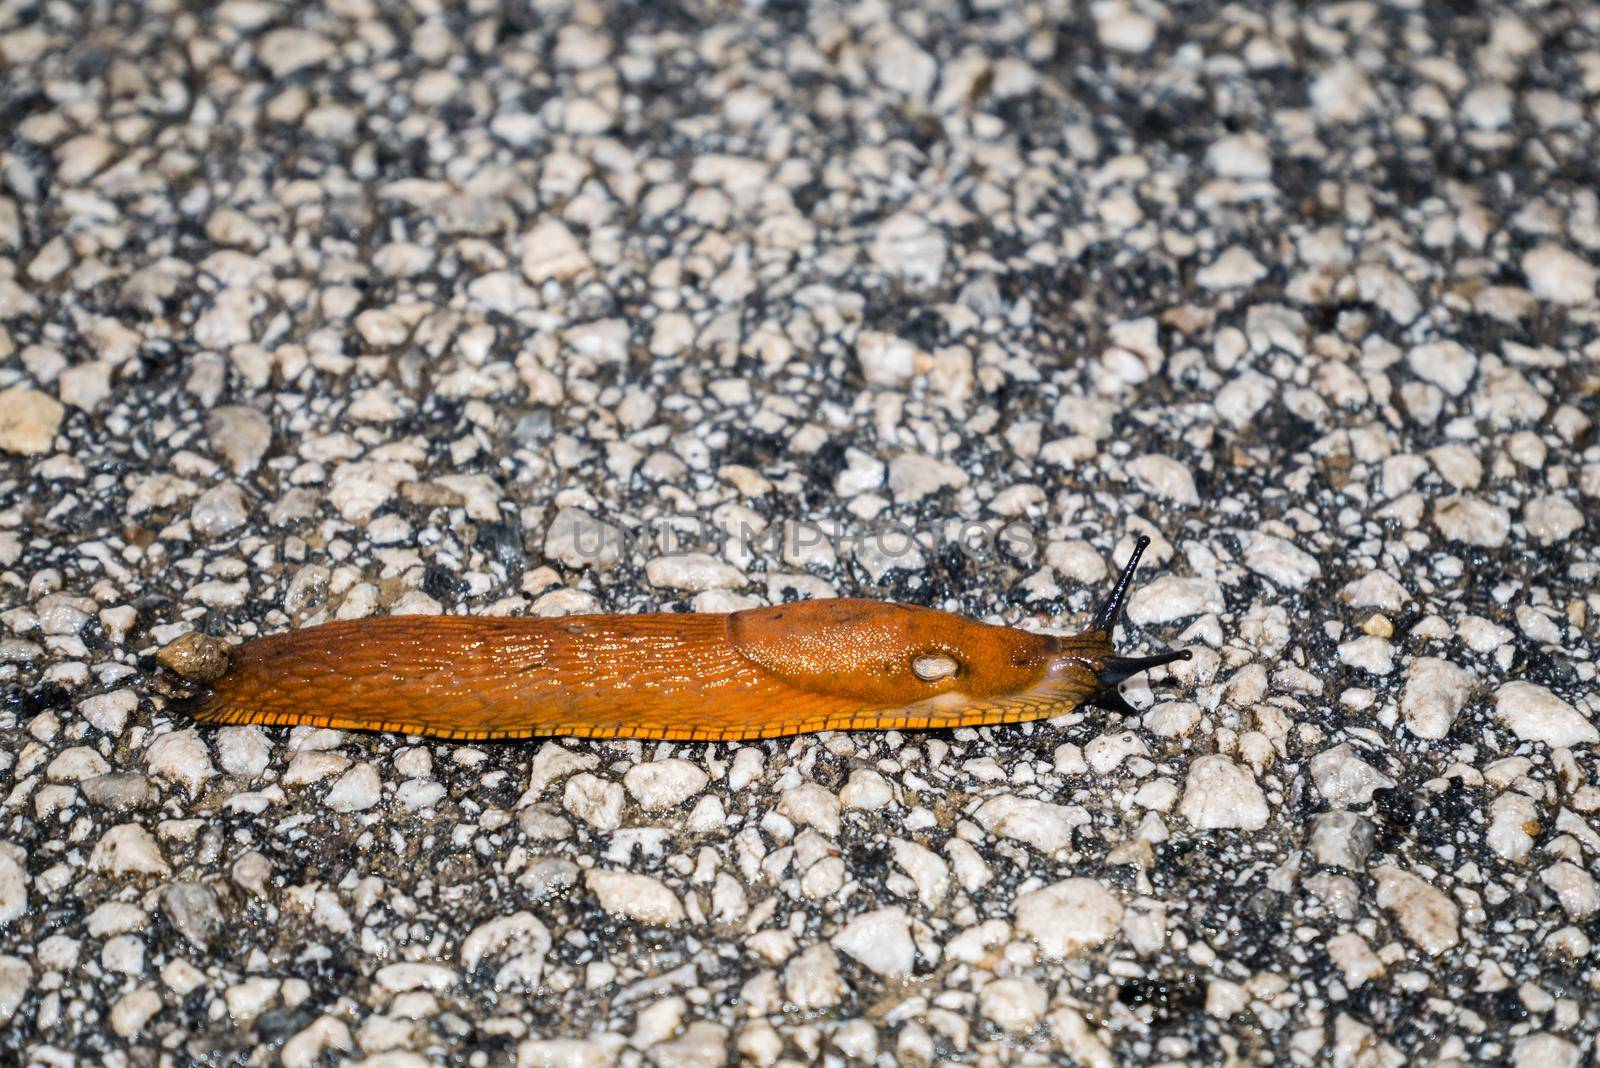 Spanish Slug (Arion lusitanicus - Arion vulgaris) or Portuguese slug as an invasive species and garden pest